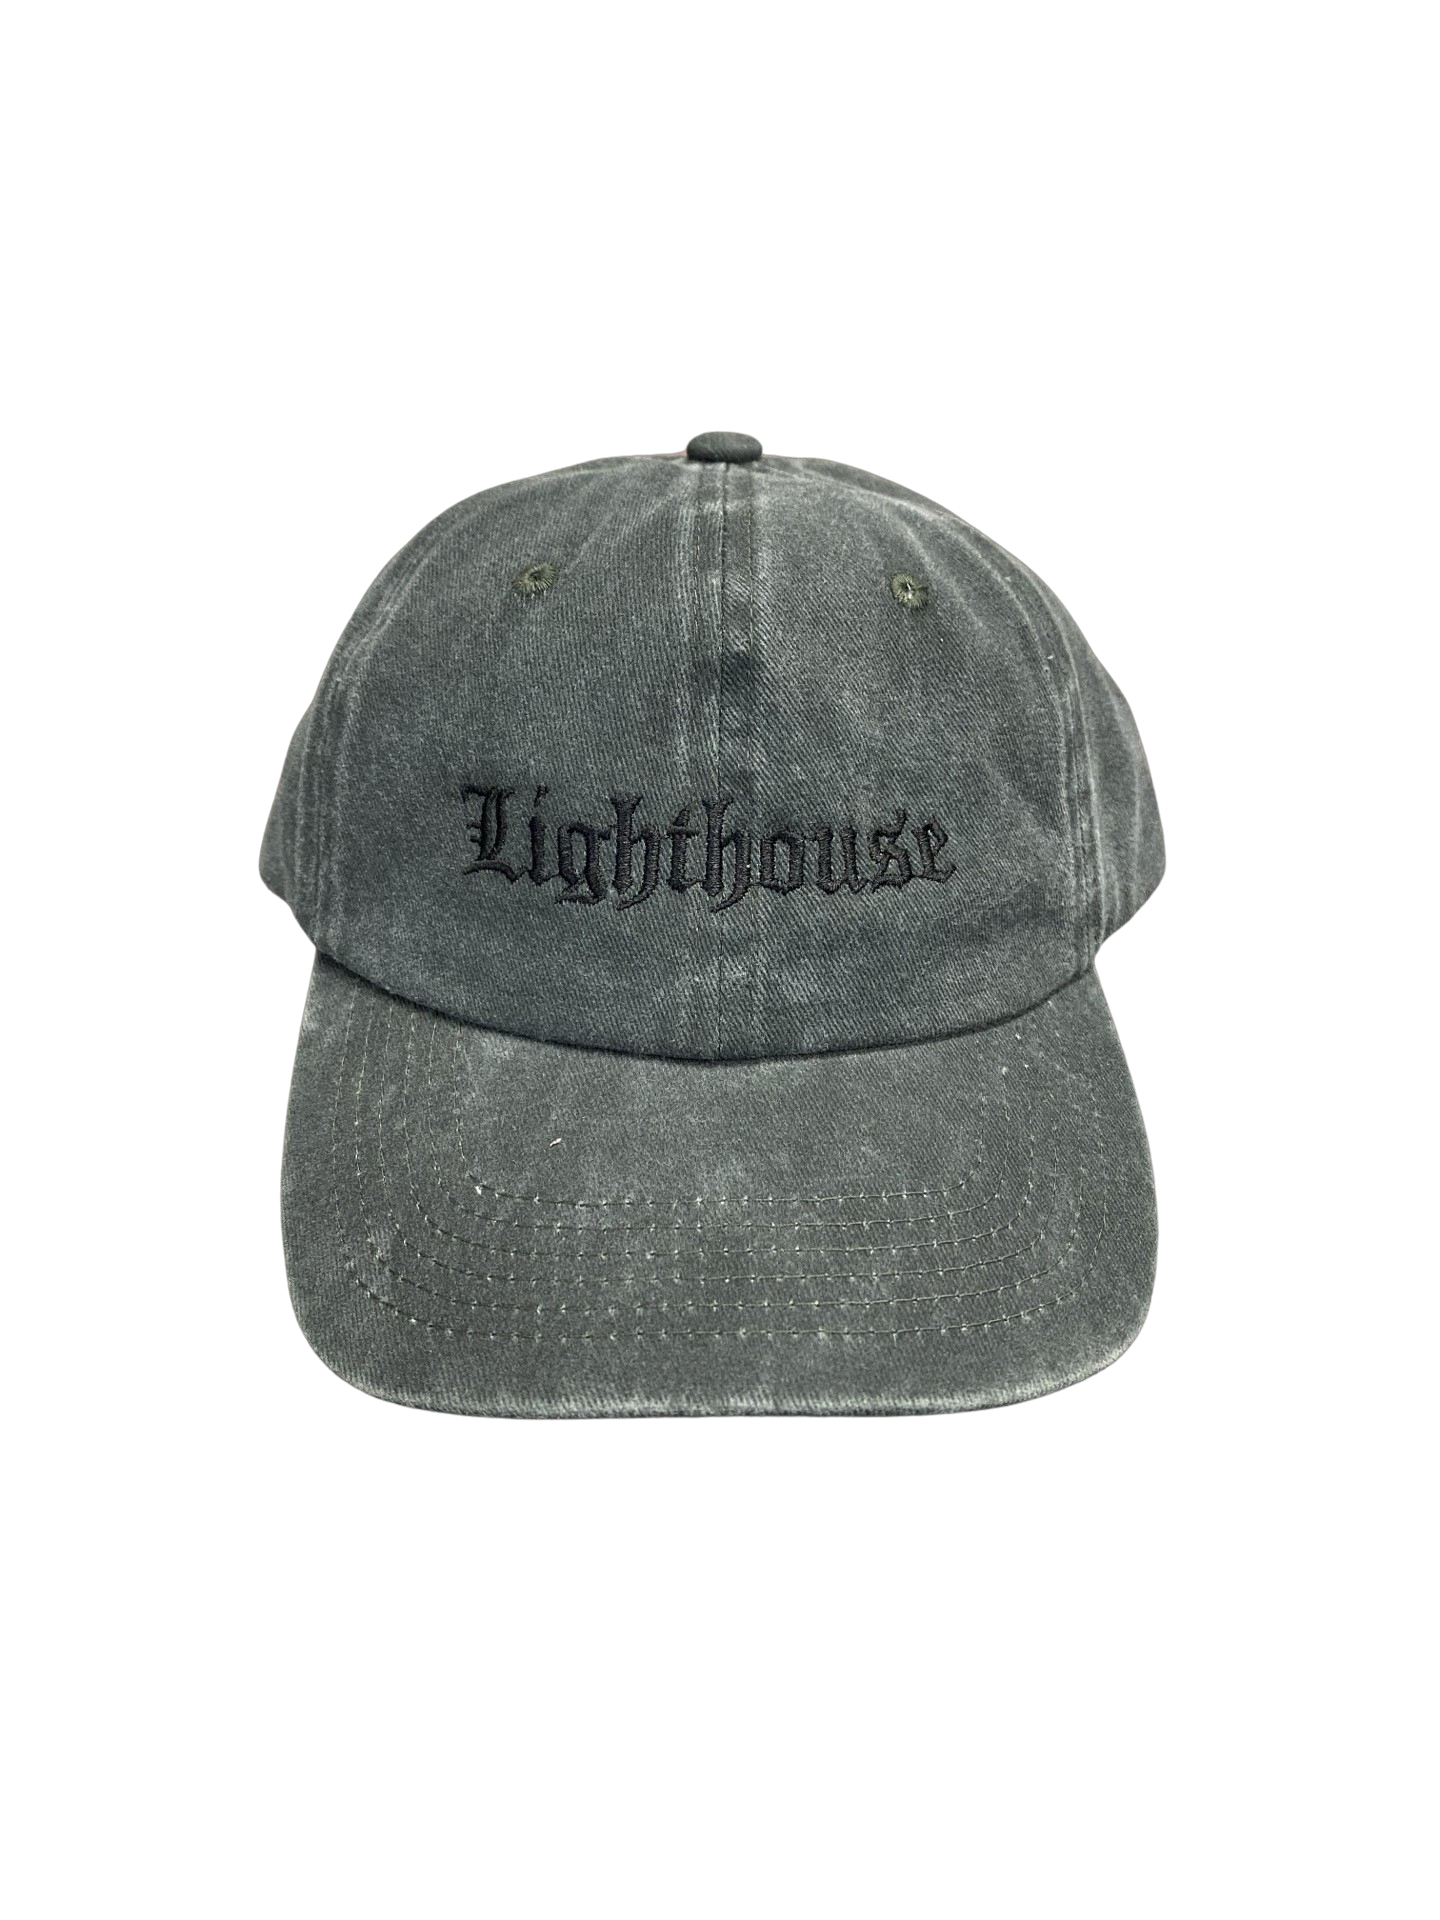 Lighthouse Old English Hat